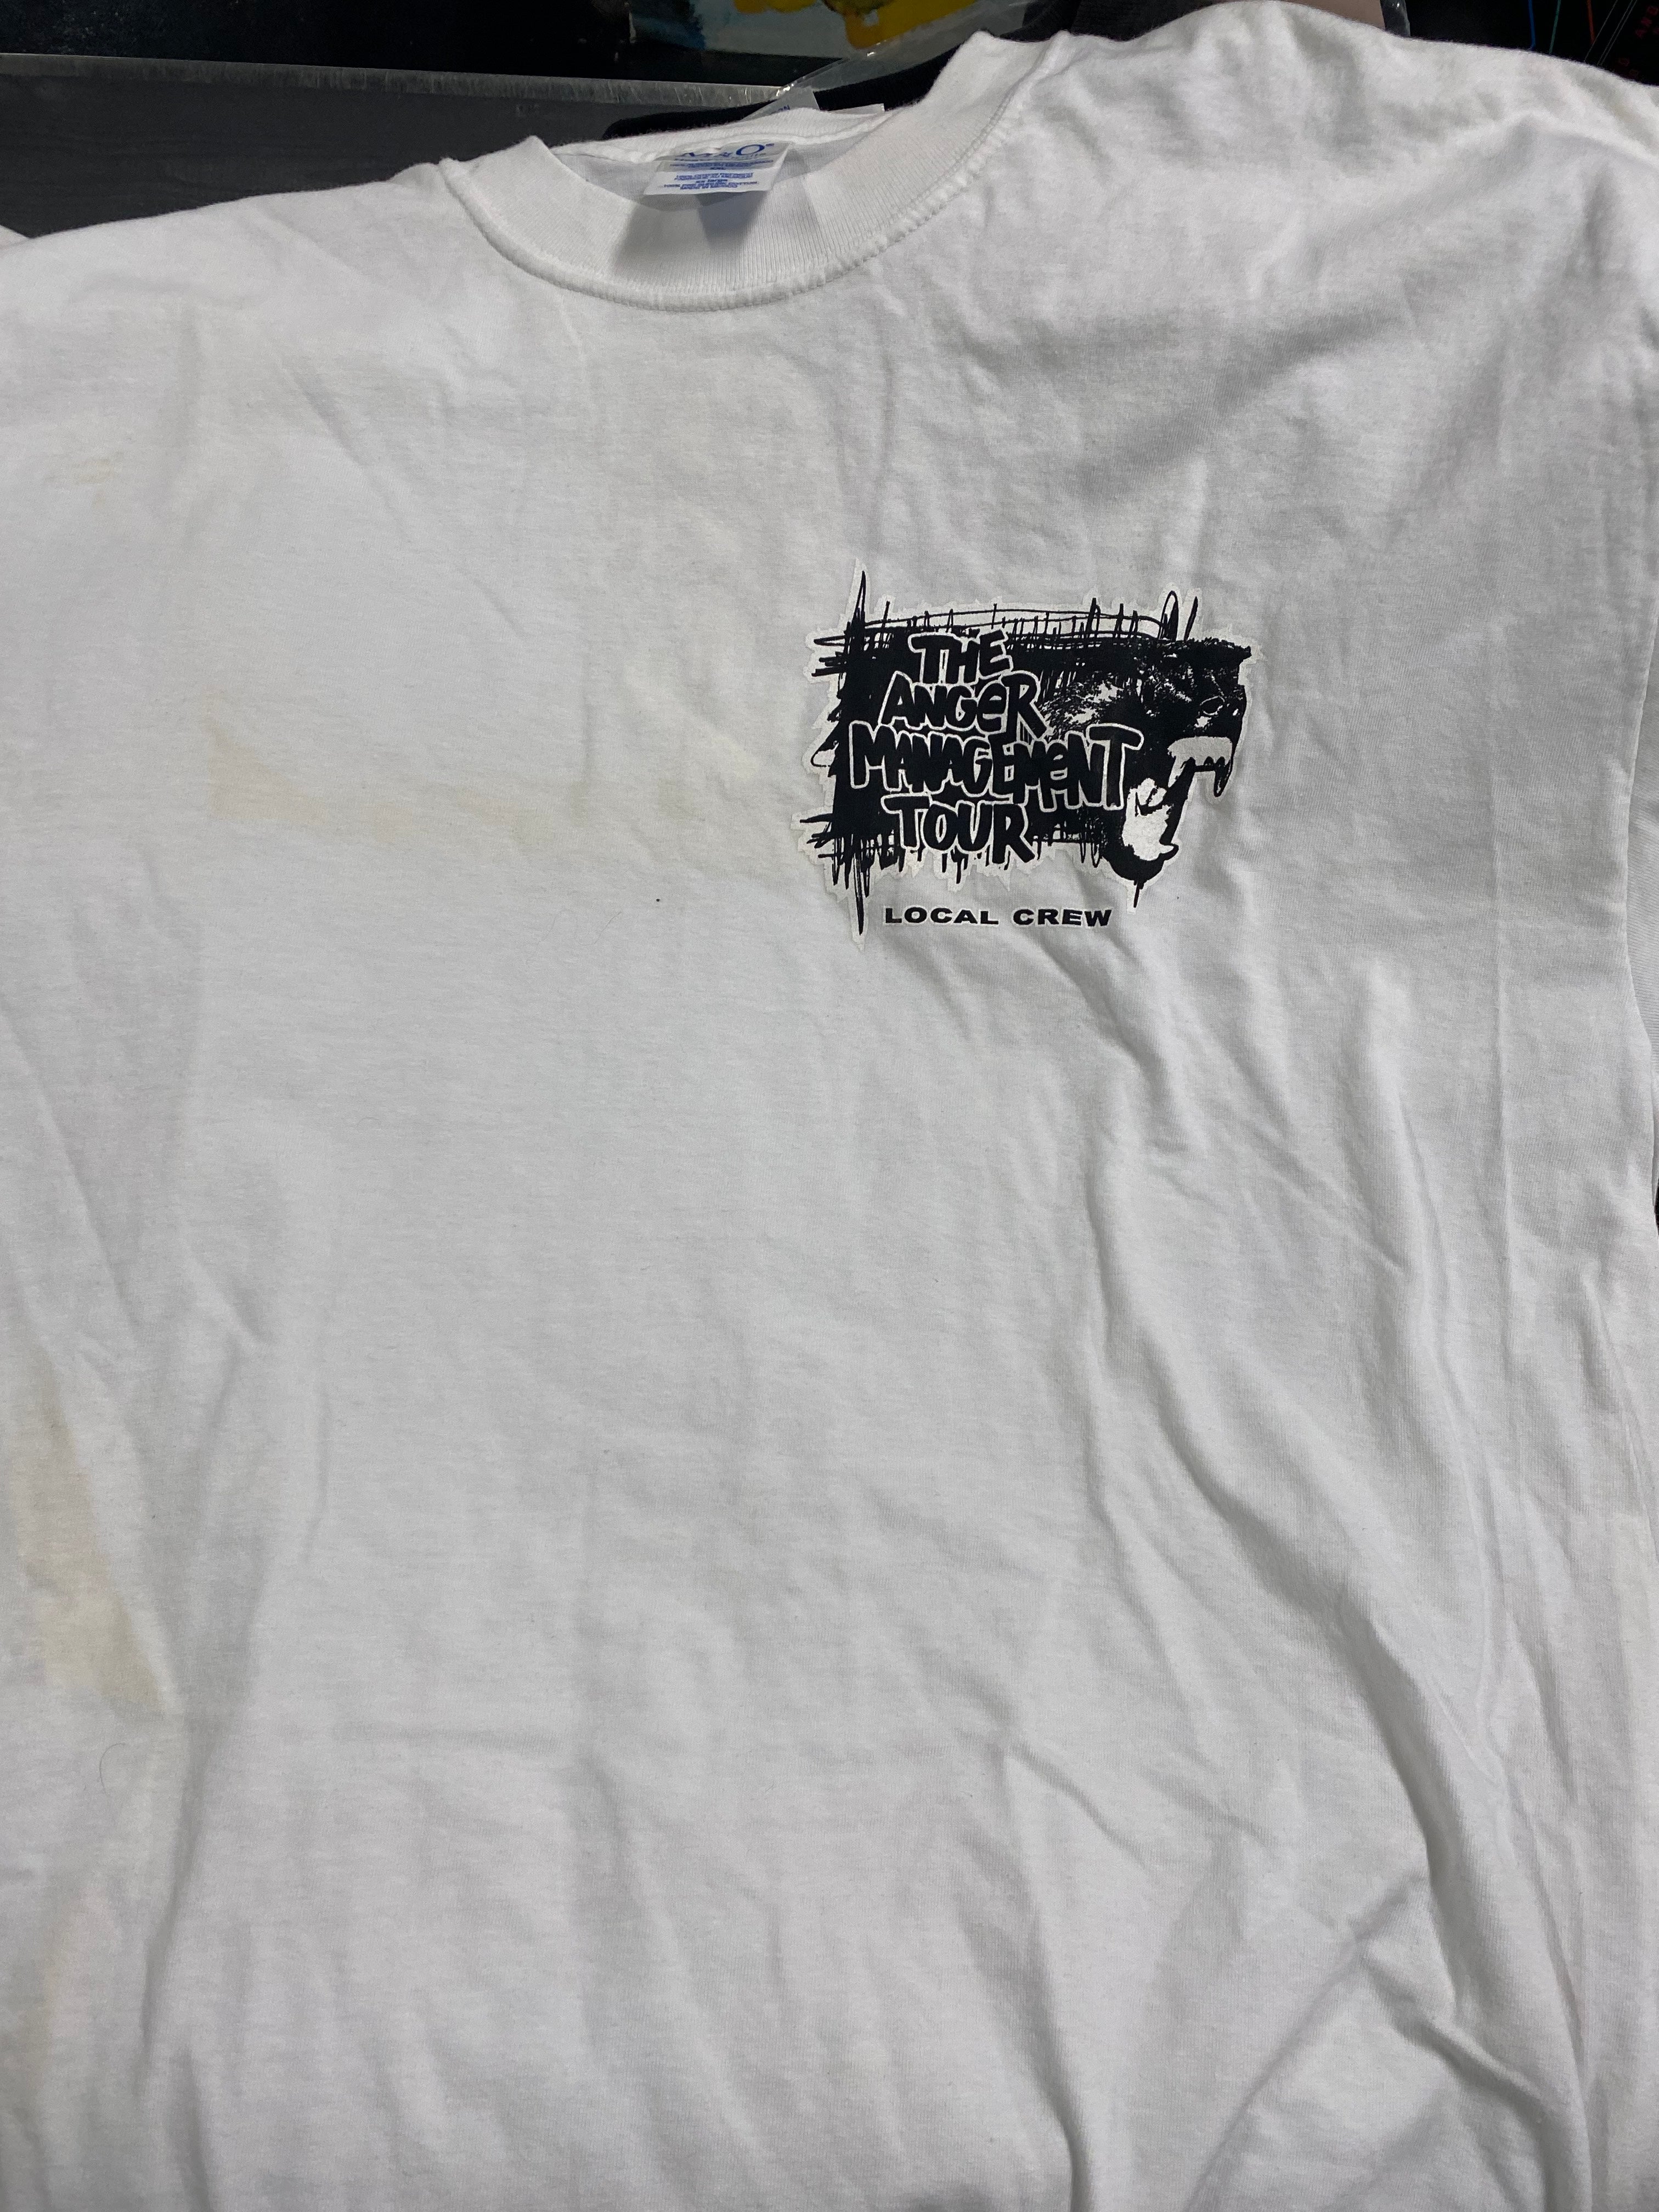 Anger Management Tour Local Crew T-Shirt, White, XXL - Darkside Records